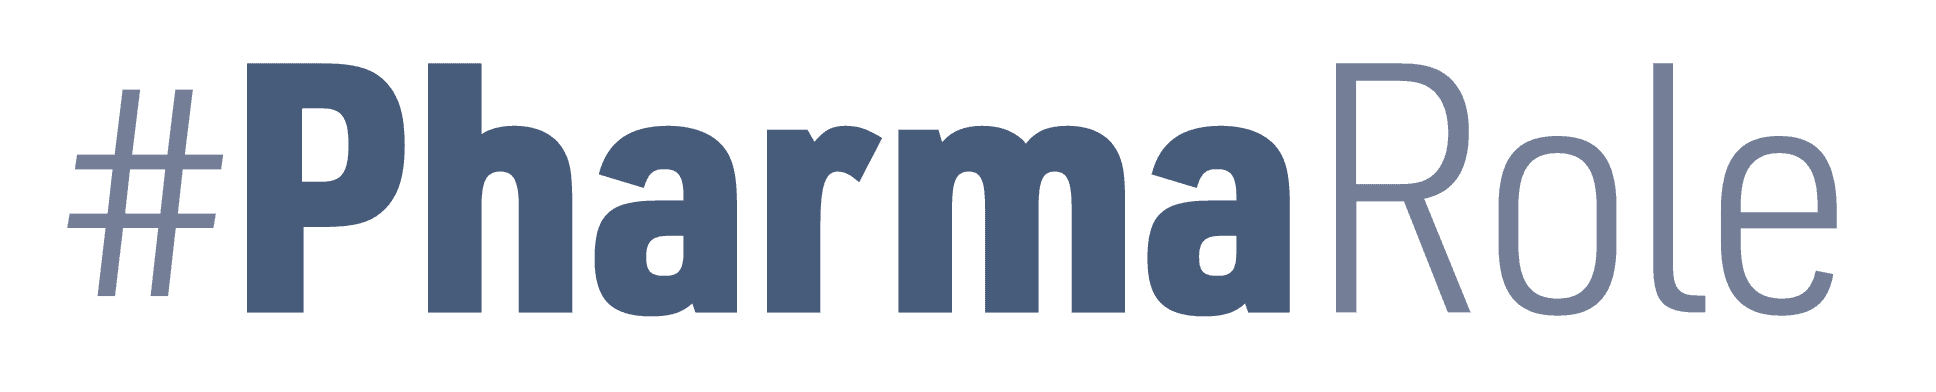 PharmaRole logo